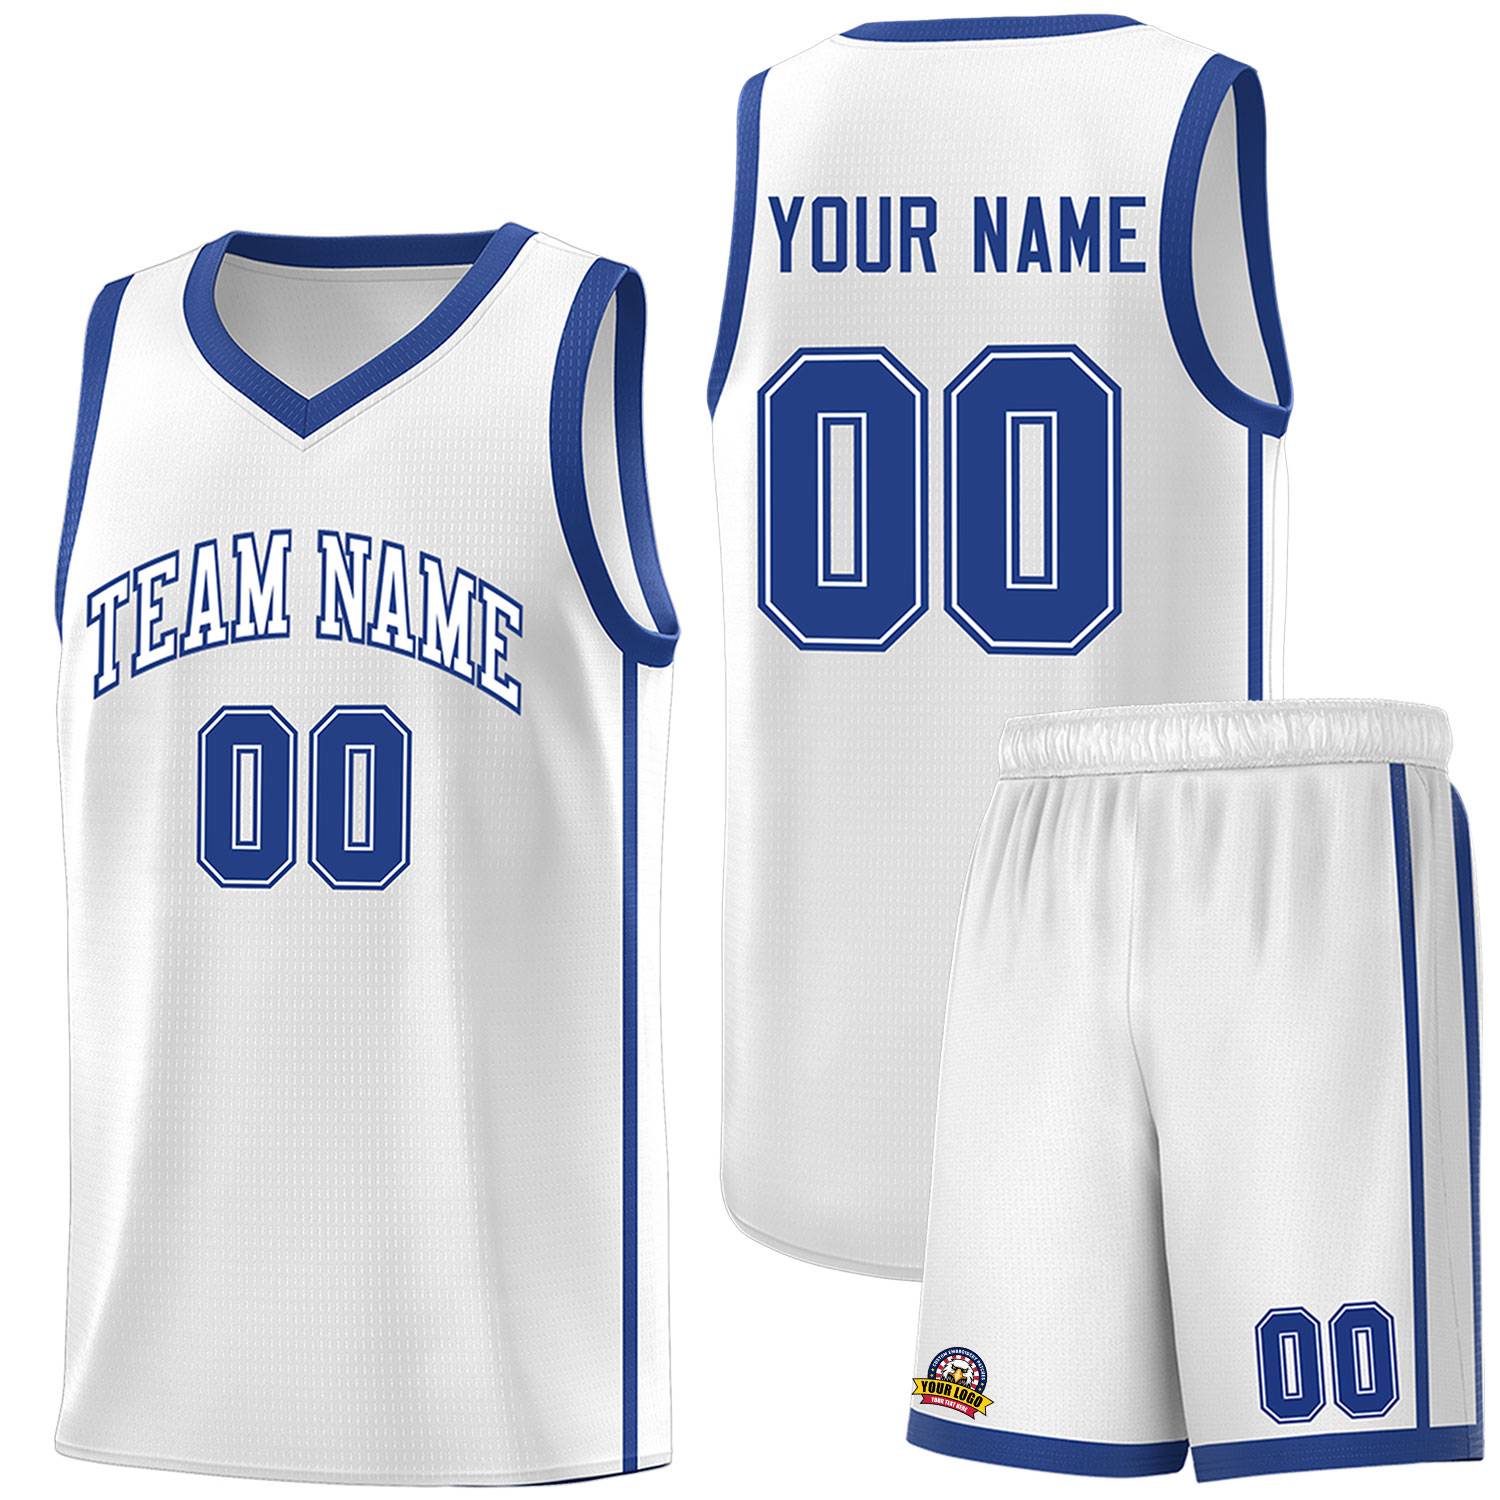 Custom White Royal Side Two Bars Sports Uniform Basketball Jersey